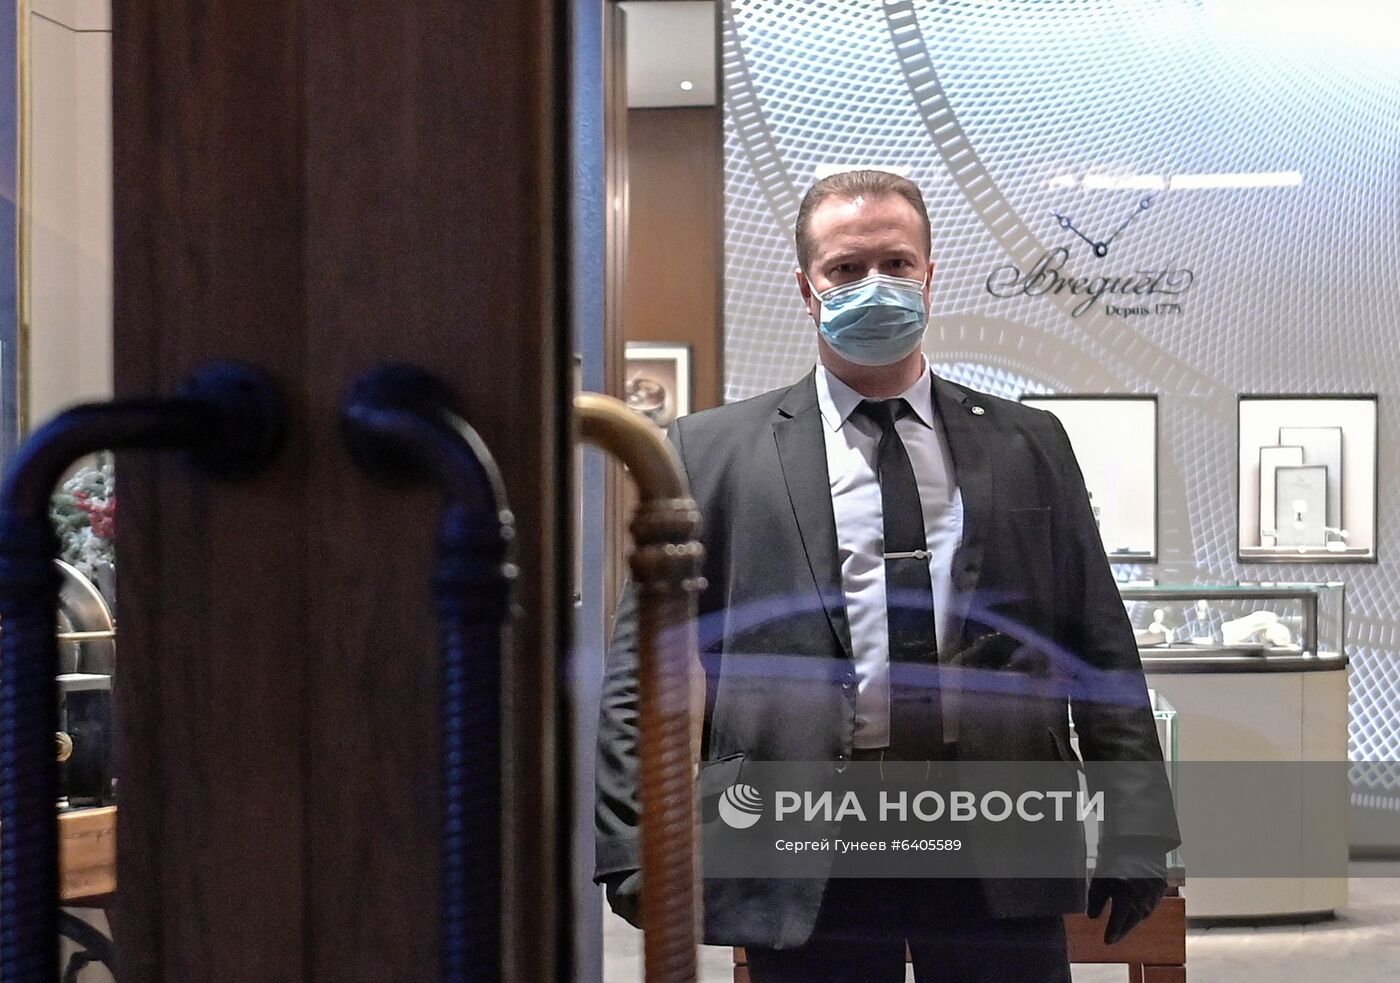  Москва во время пандемии коронавируса    